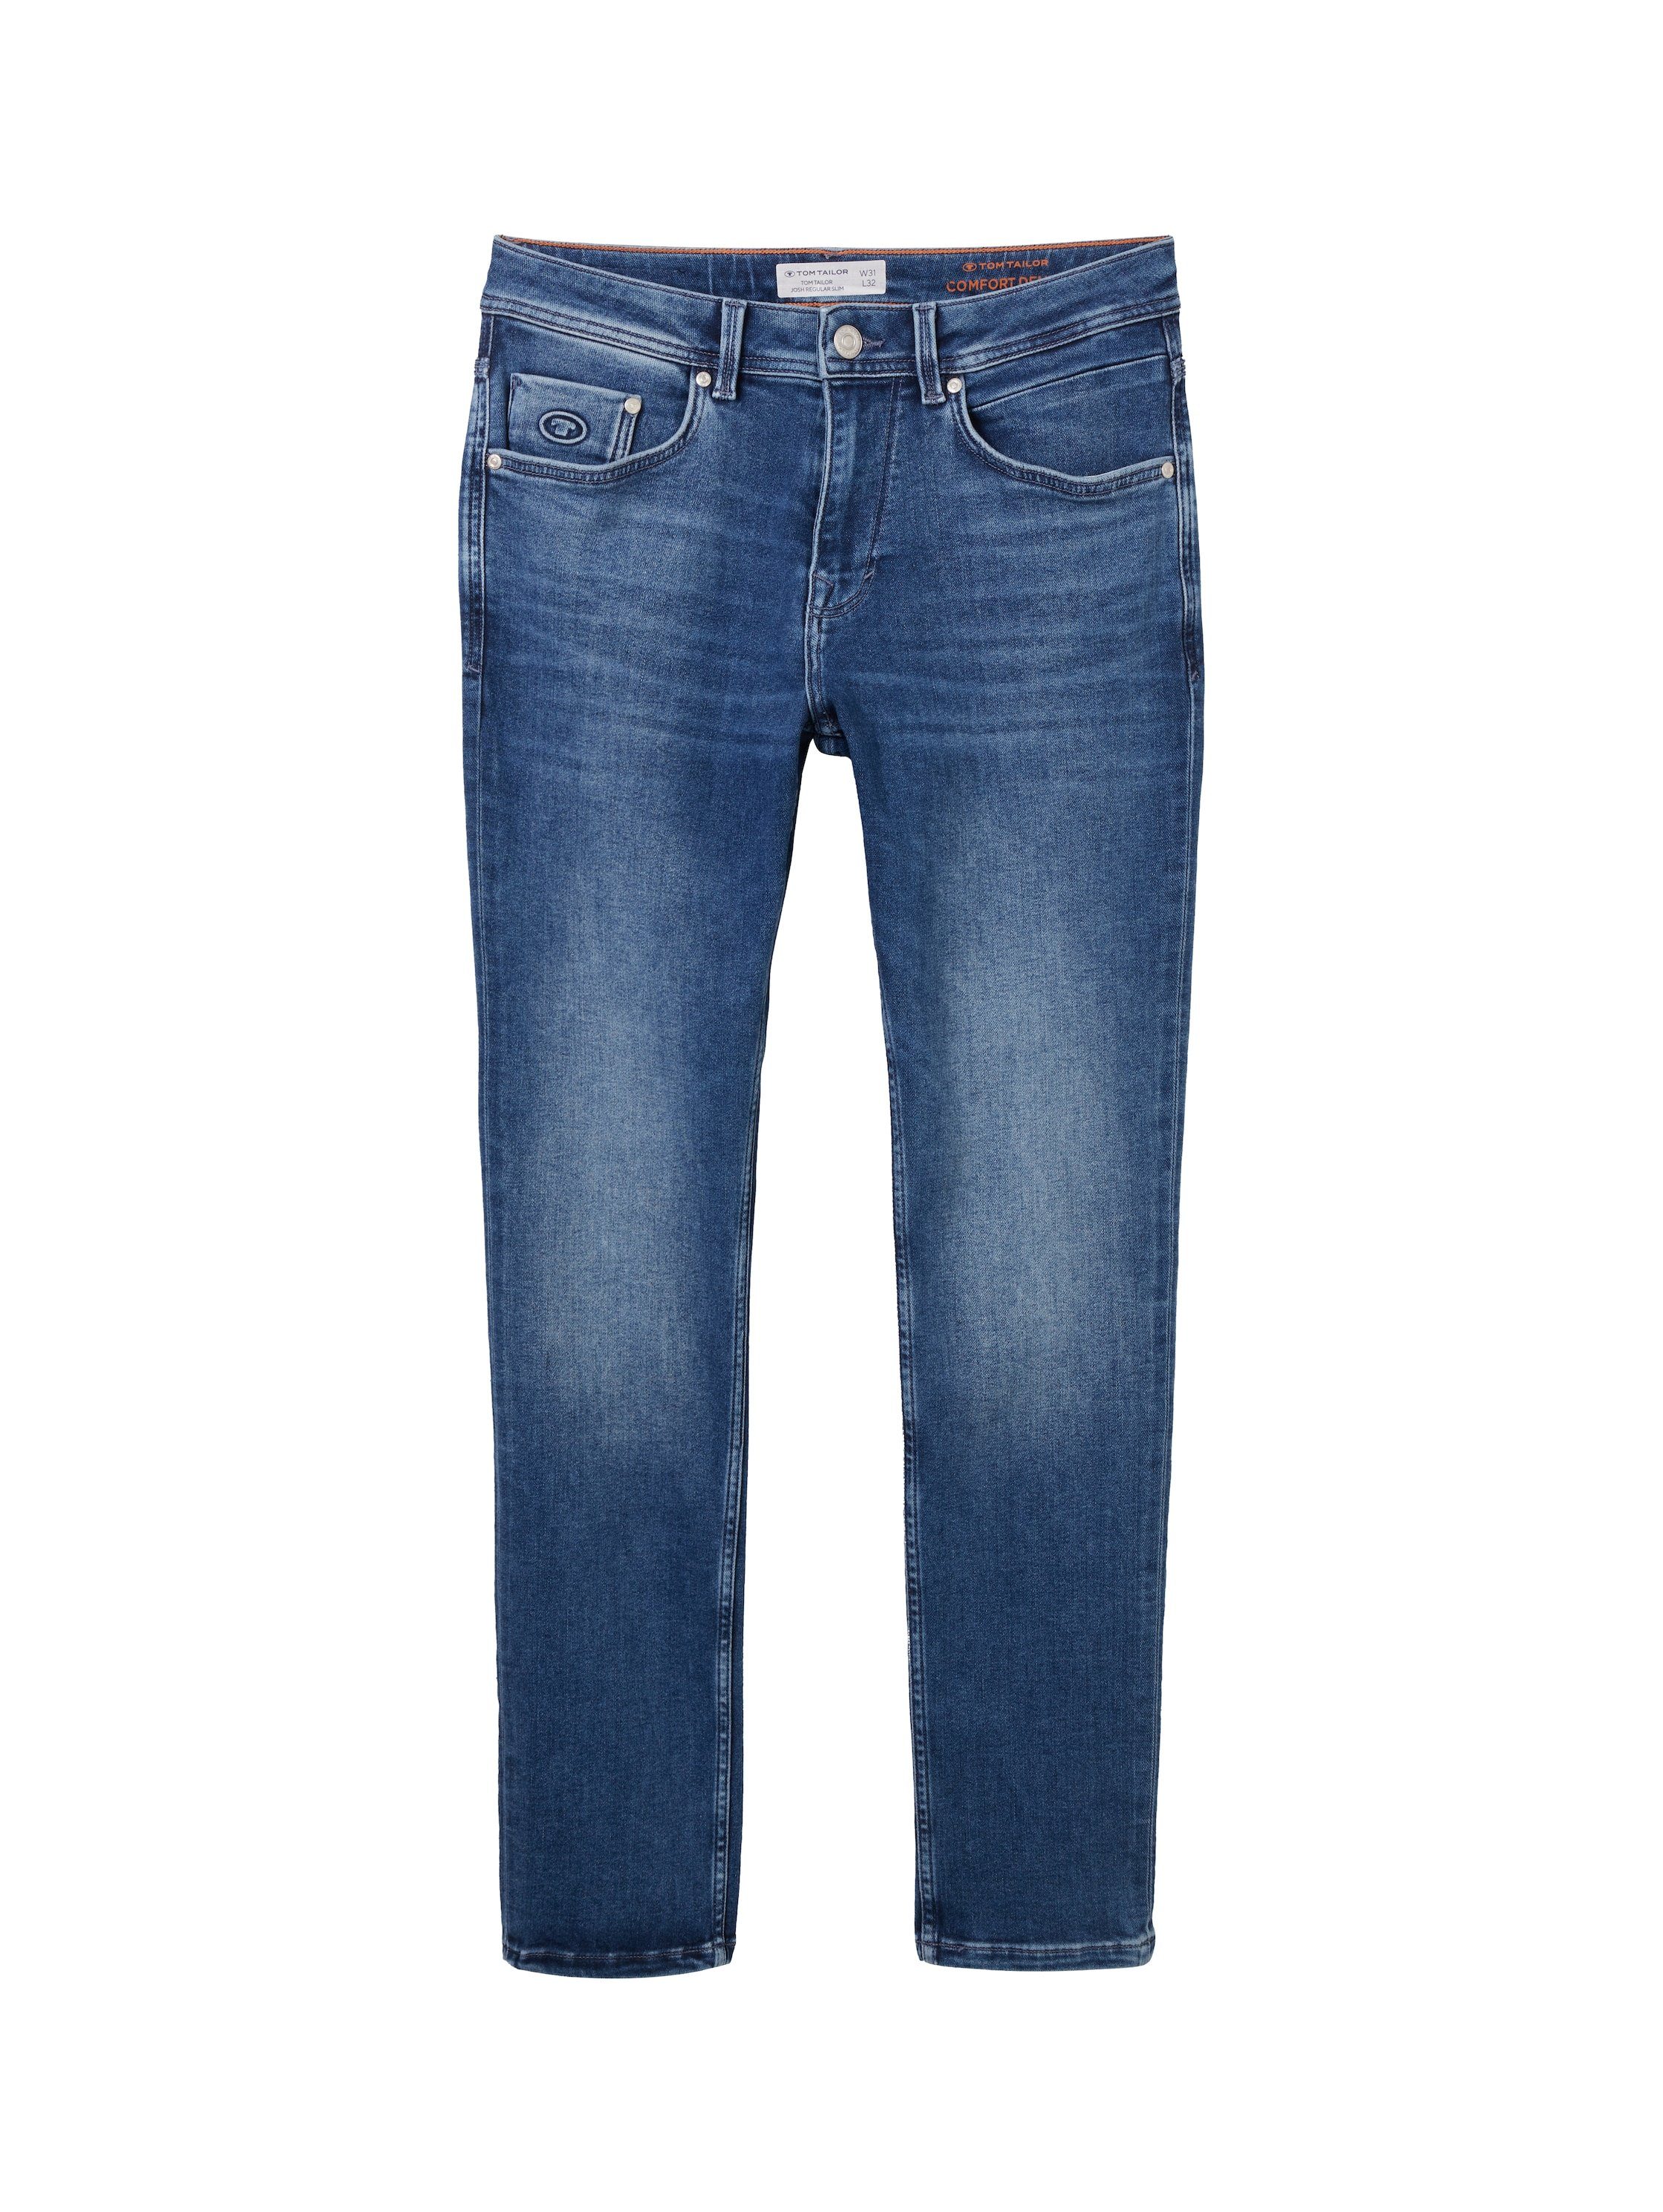 34 5-Pocket-Jeans TAILOR mid mit TOM 5-Pocket-Style stone used